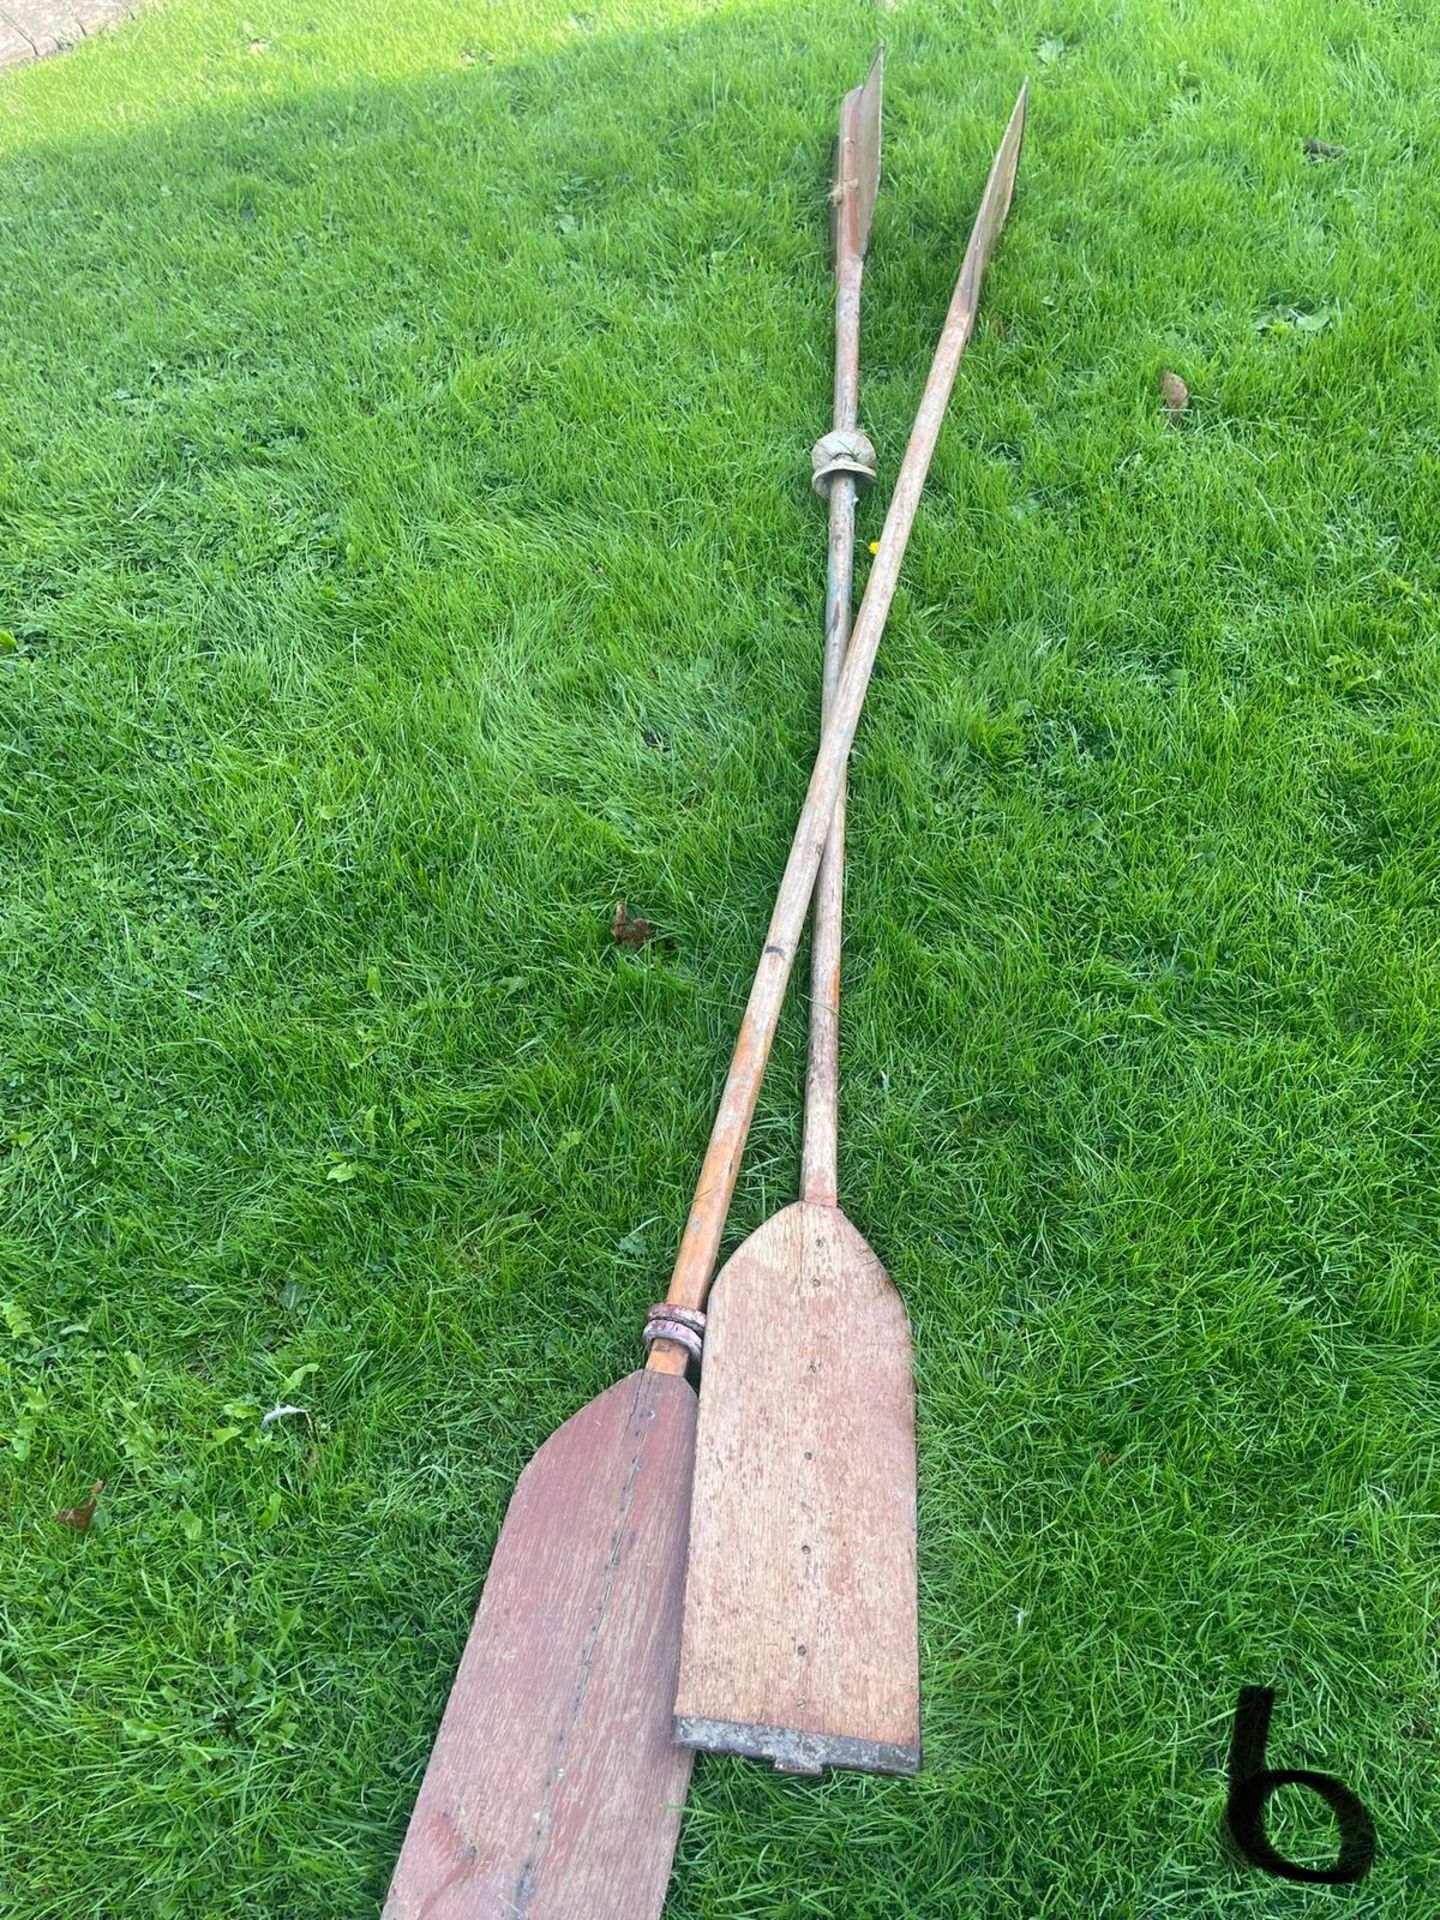 Pair of wooden oars